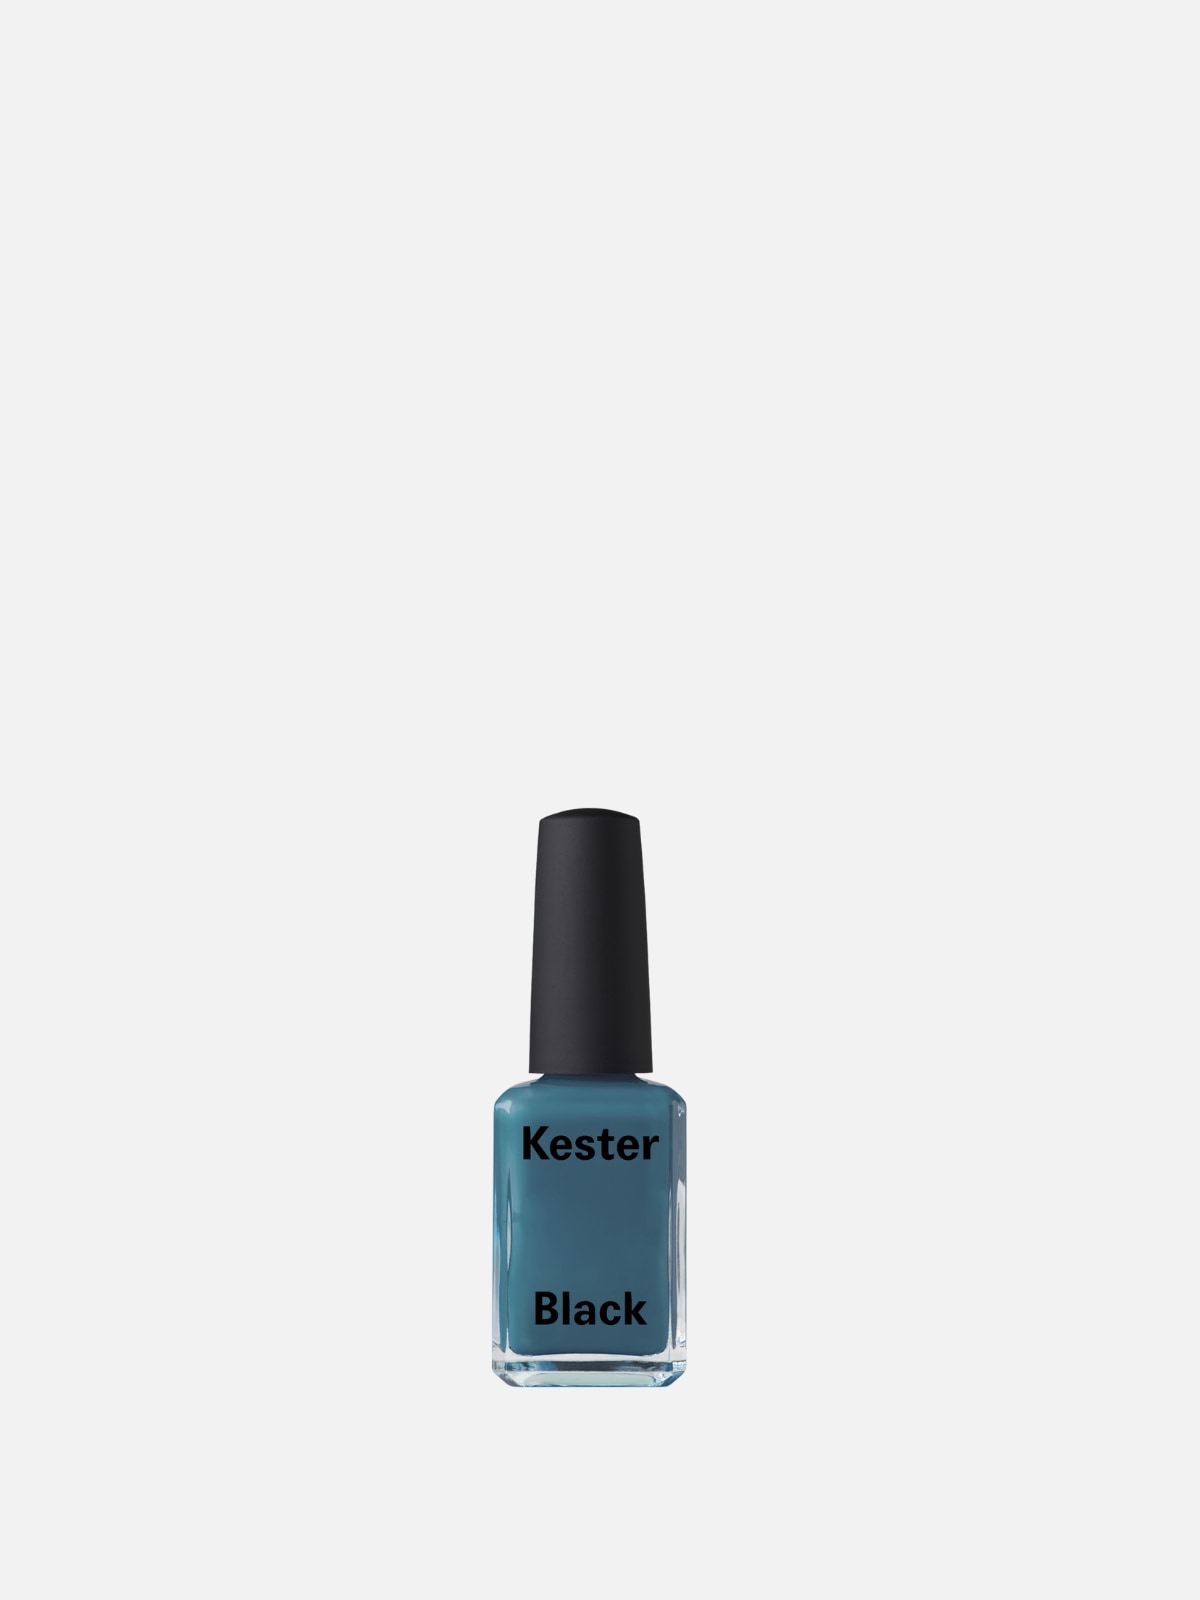 Kester Black - Typhoon - Smalto color ceruleo scuro